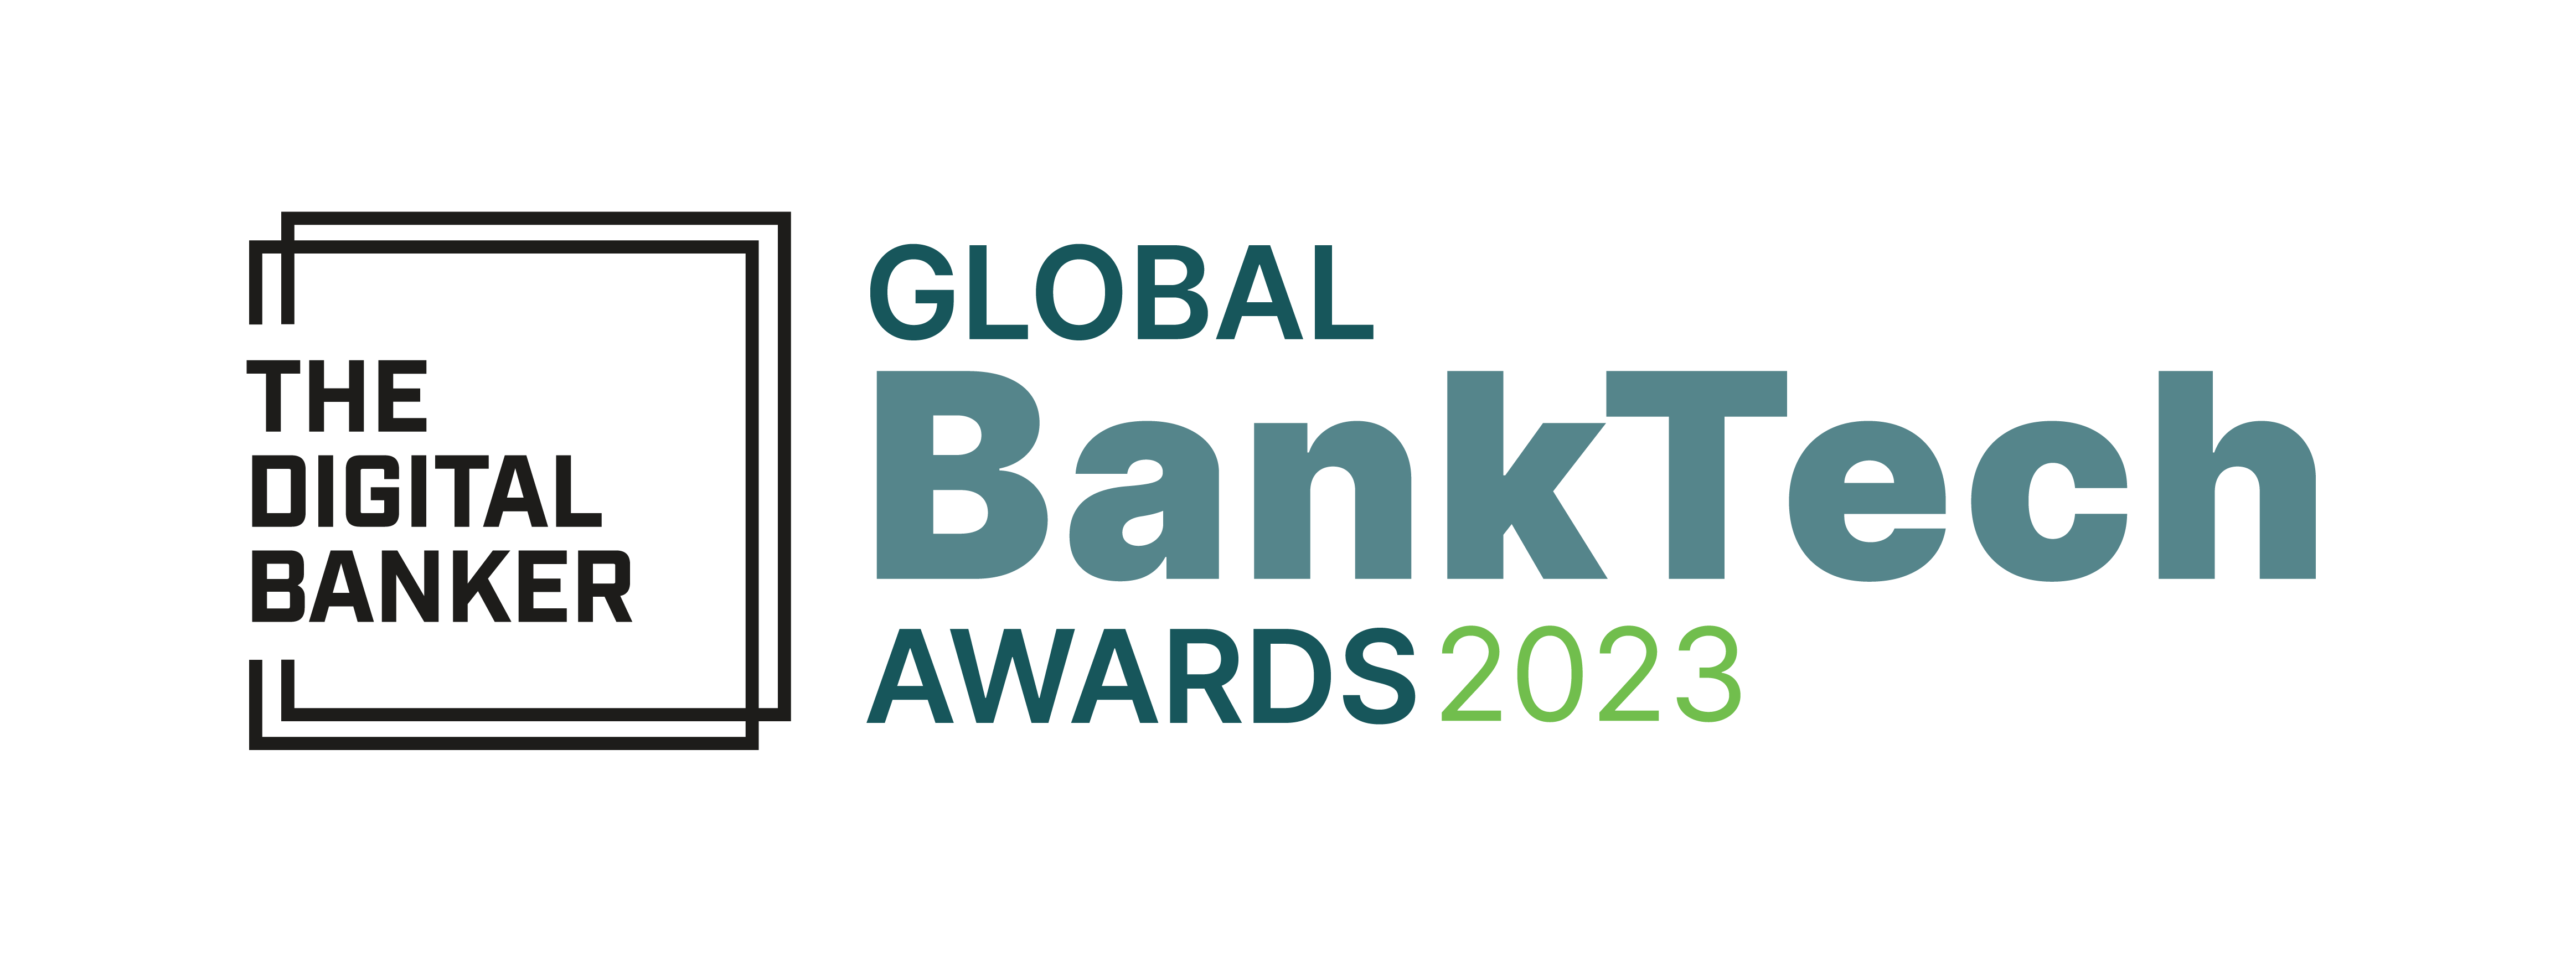 Global BankTech Awards 2023